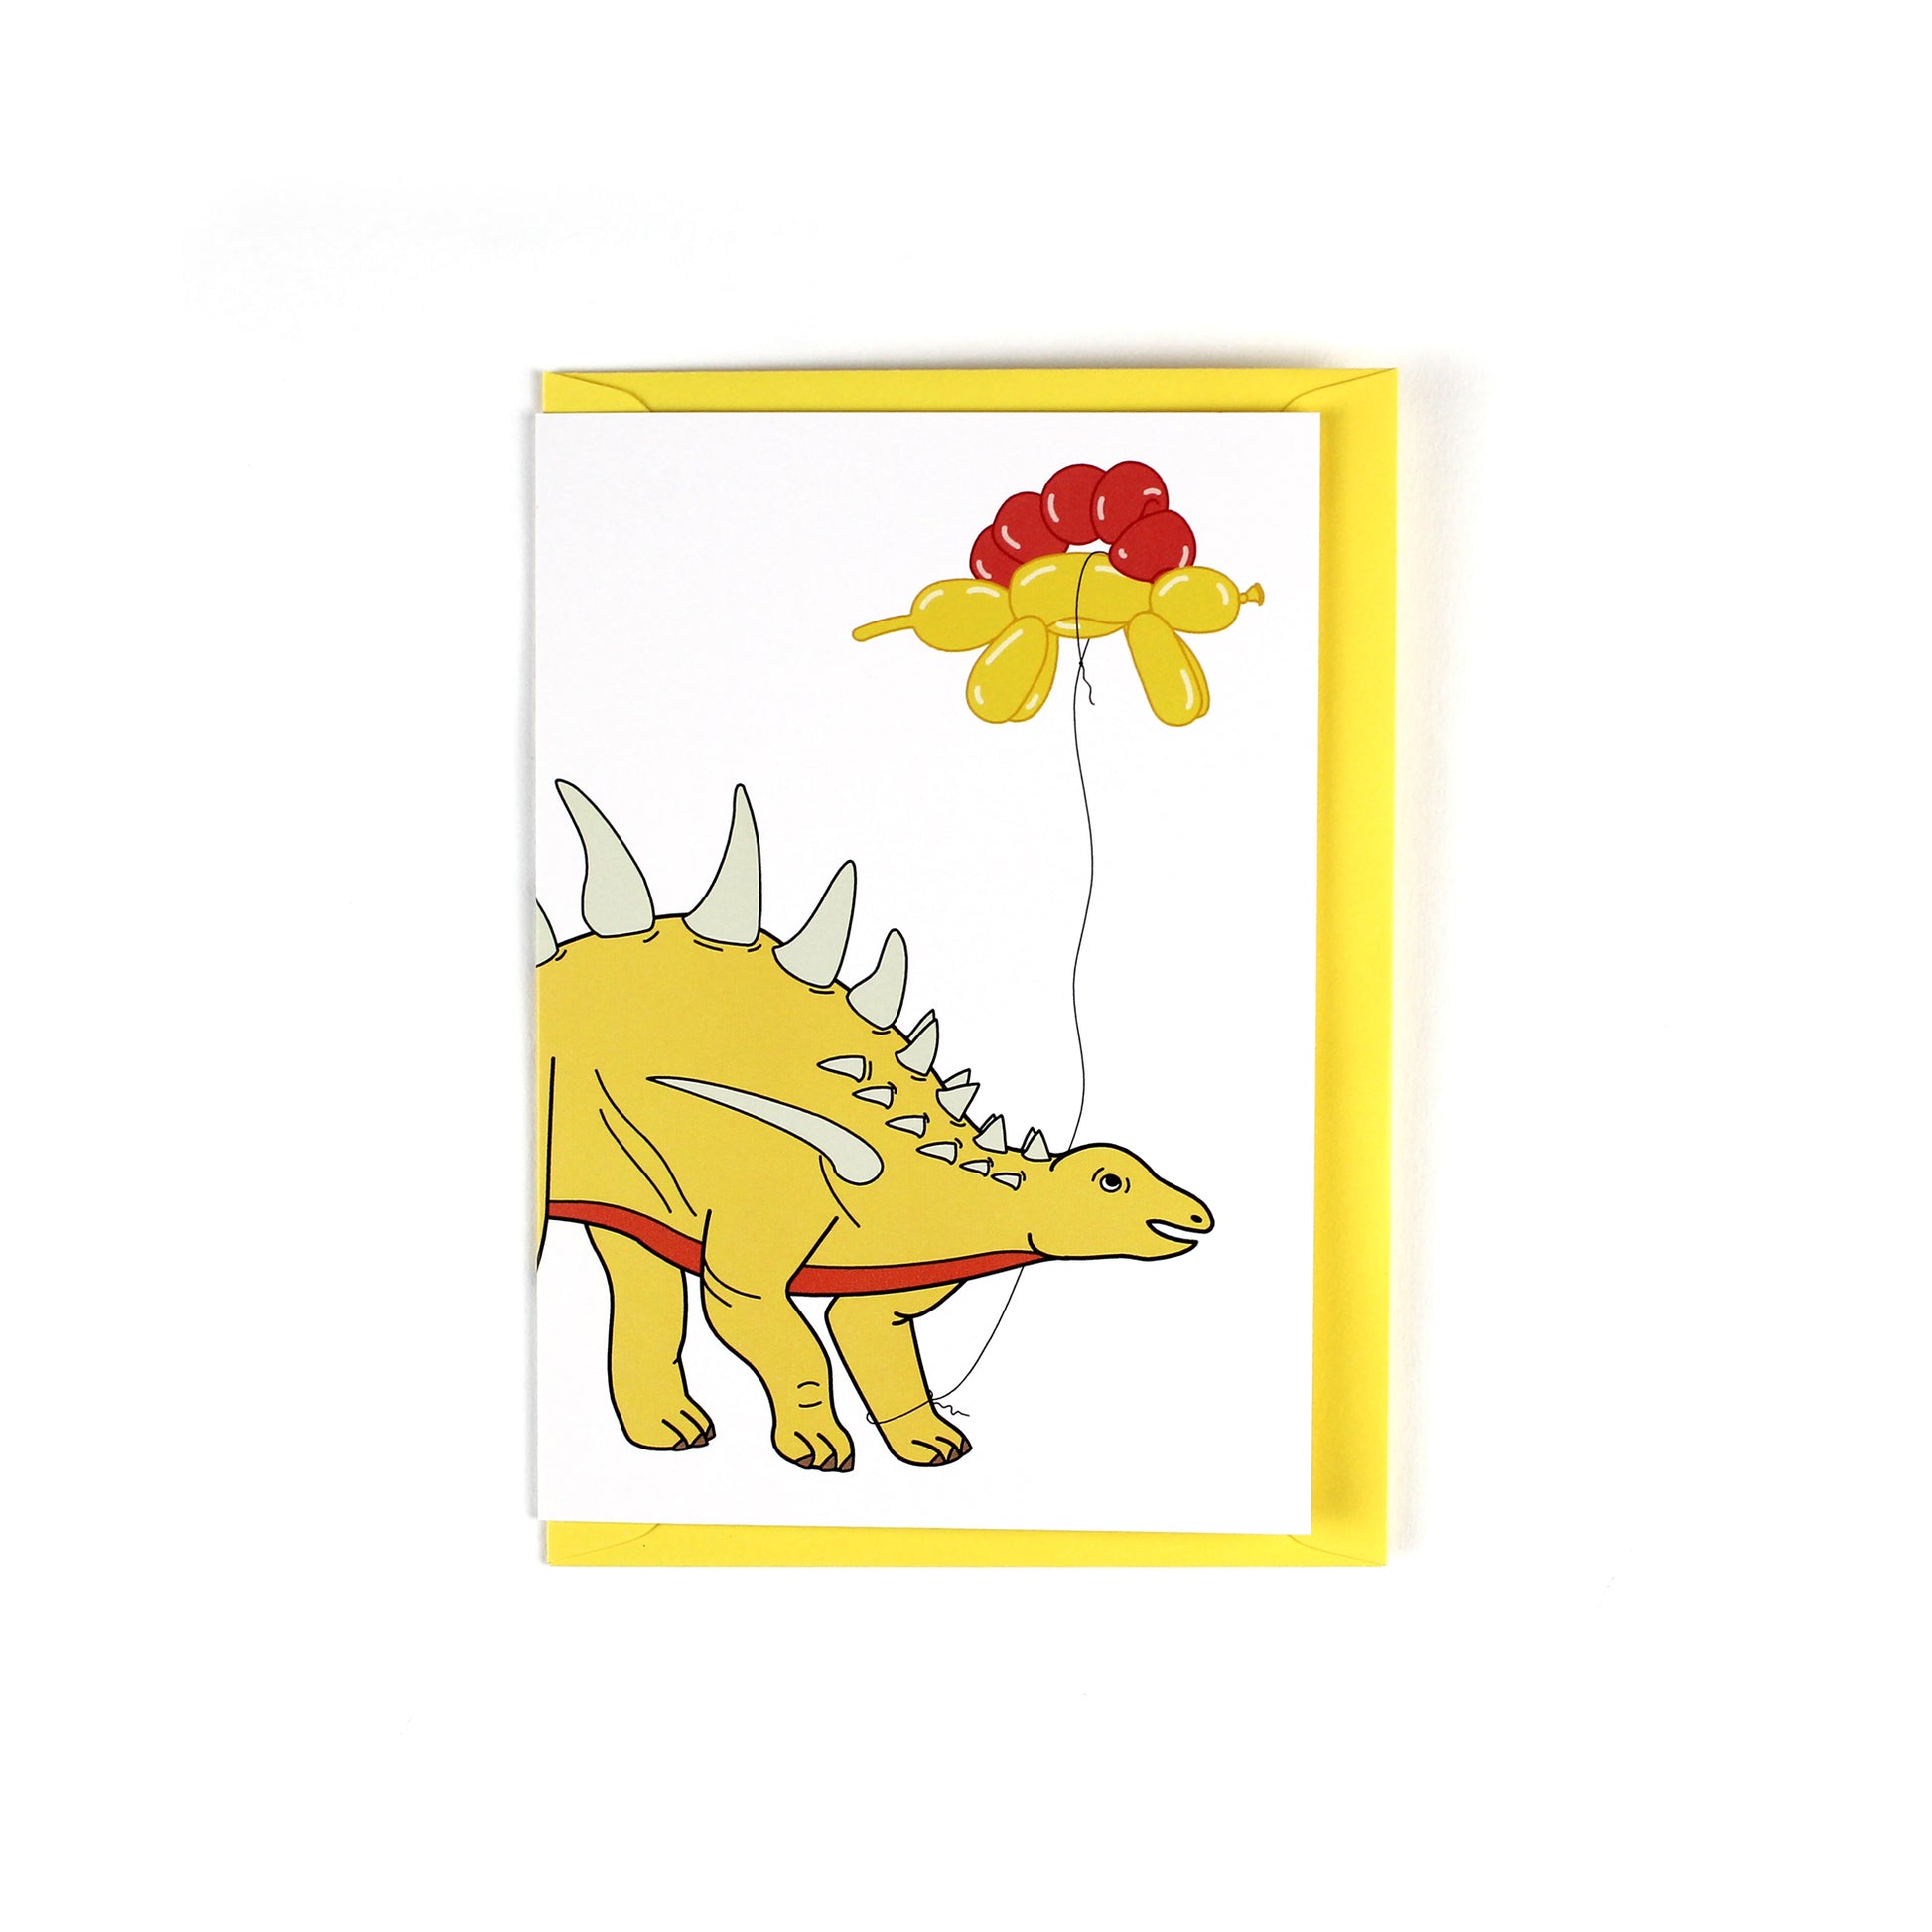 greeting card featuring a stegosaurus dinosaur holding a balloon dinosaur on a string